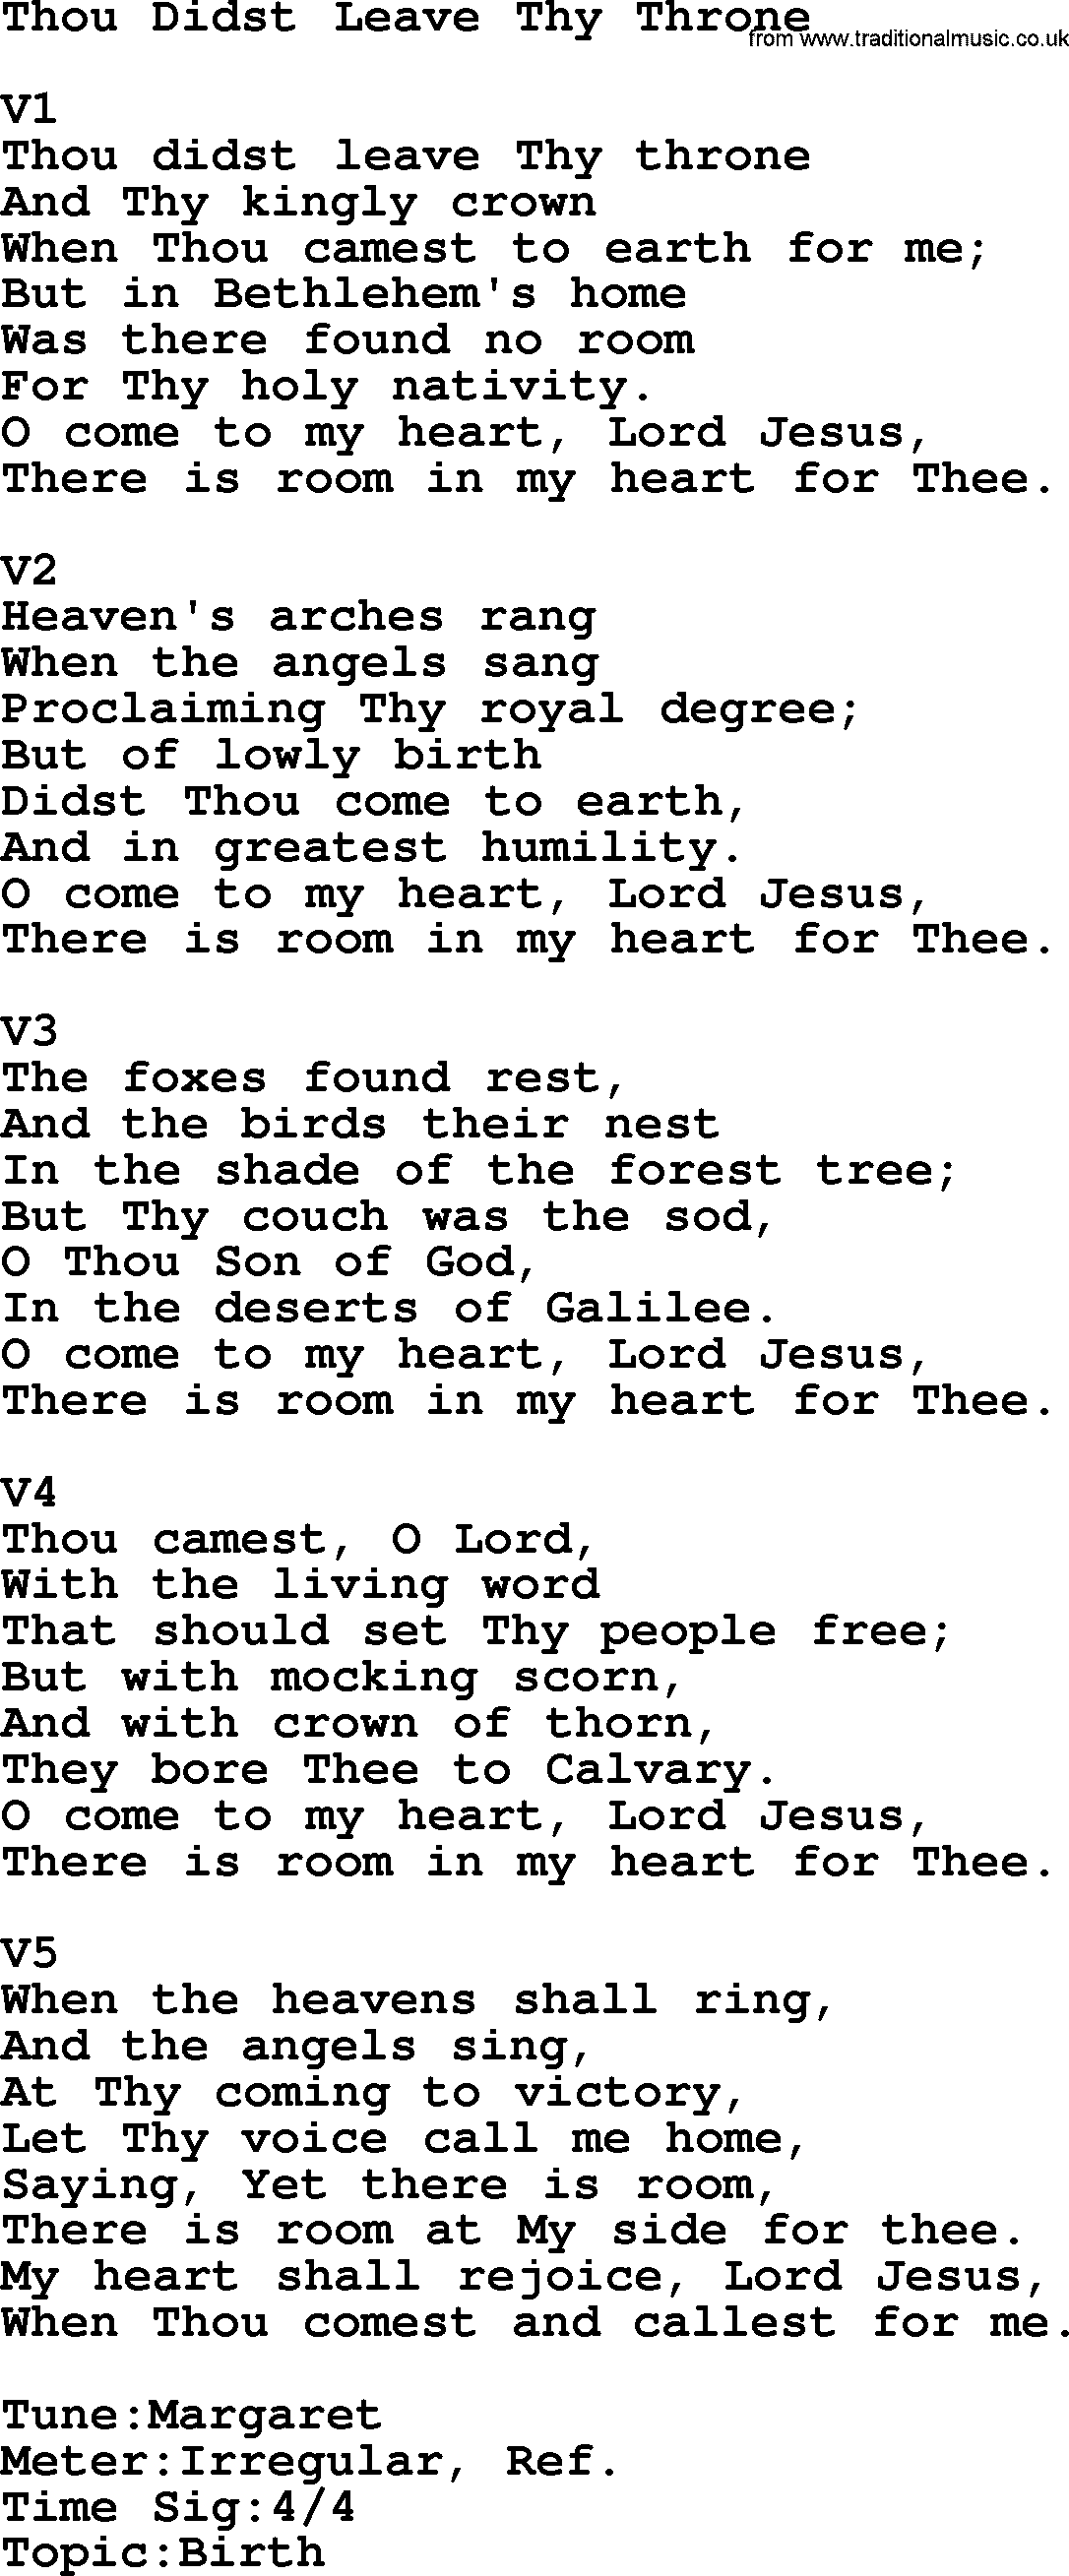 Adventist Hynms collection, Hymn: Thou Didst Leave Thy Throne, lyrics with PDF